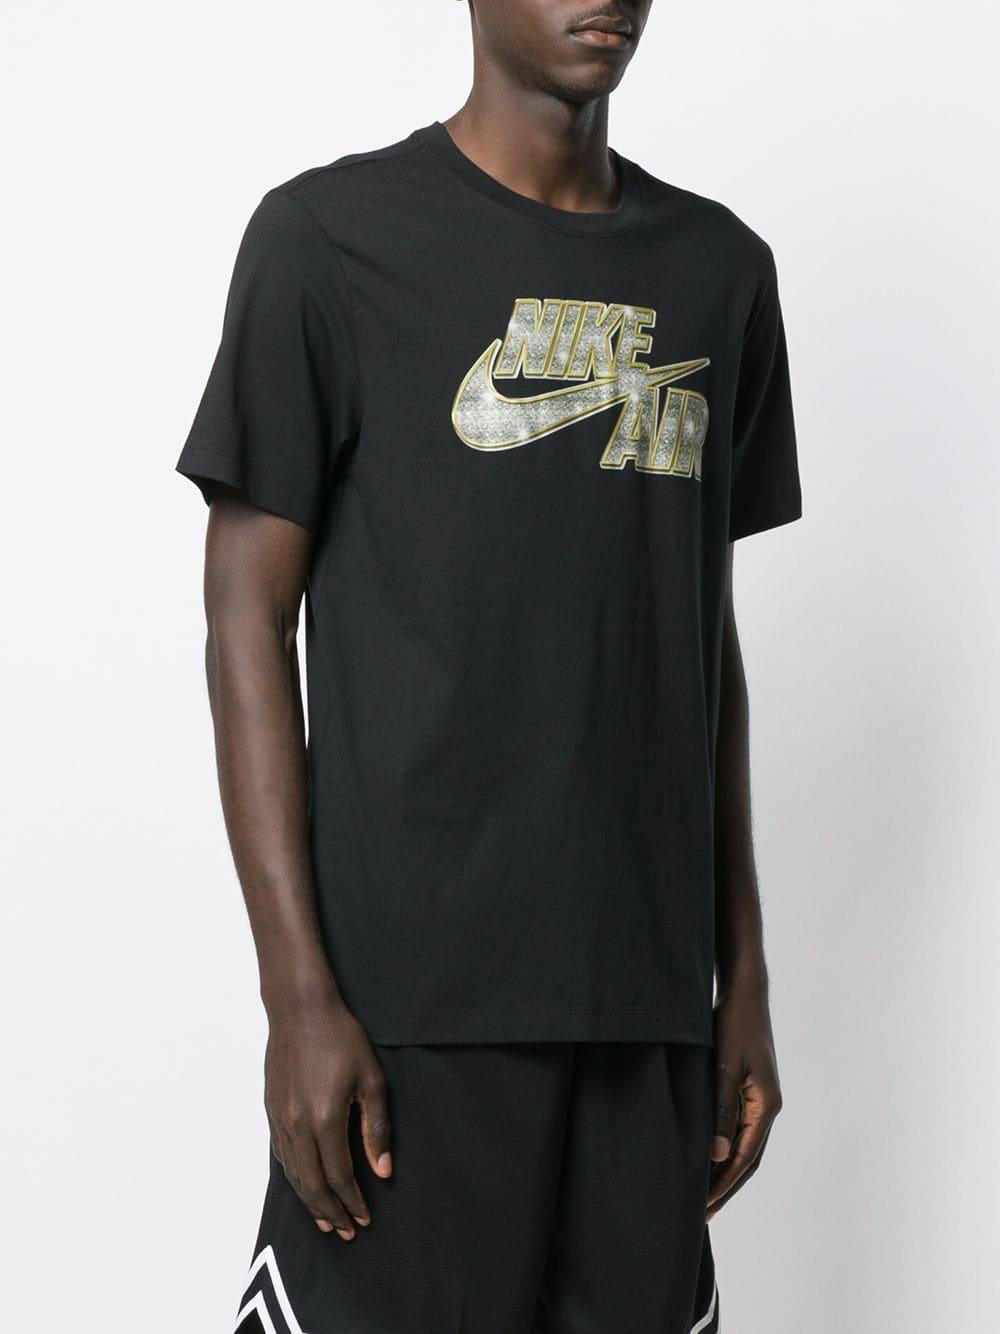 Nike Cotton Air Bling T-shirt in Black for Men - Lyst